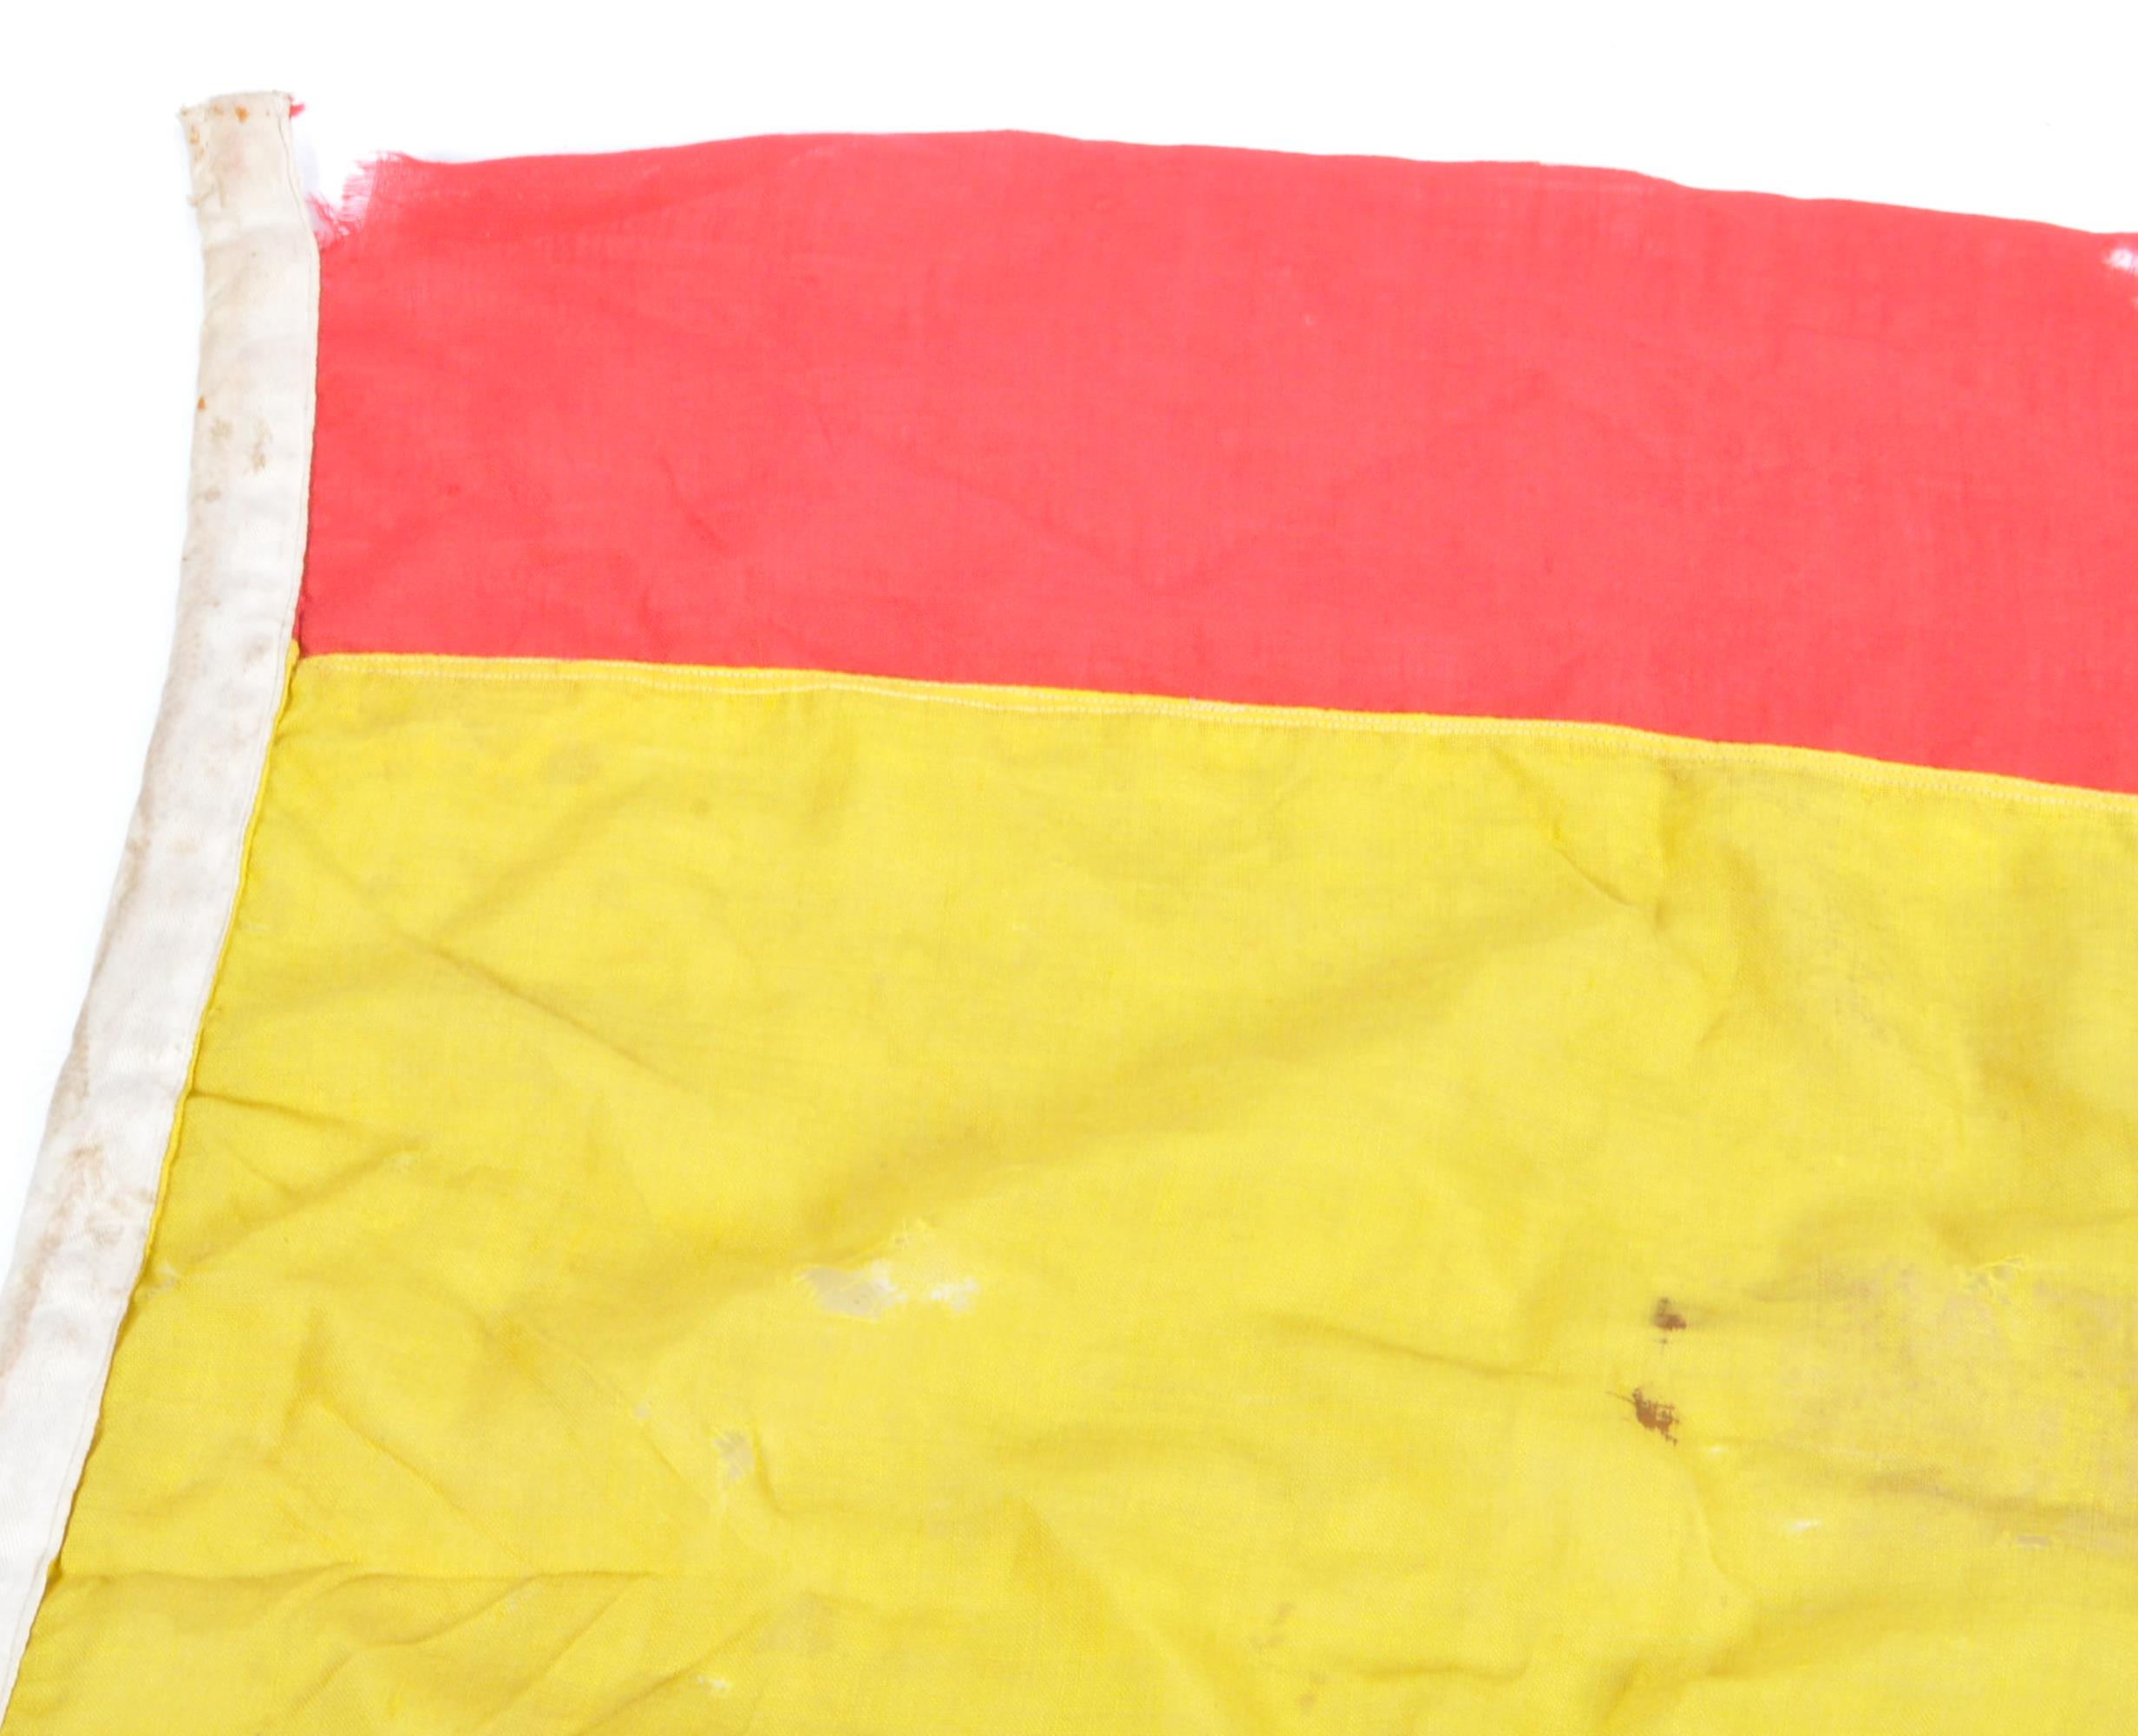 SPANISH CIVIL WAR INTEREST - LARGE LINEN FLAG - Image 5 of 5